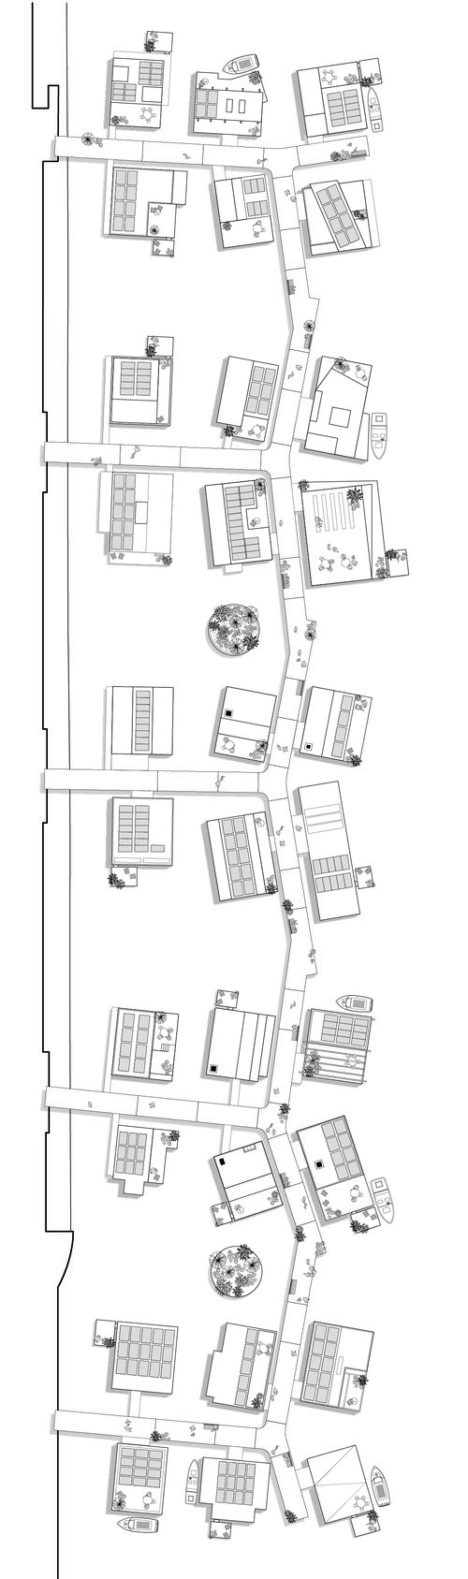 An overhead layout for Amsterdam's new Schoonschip floating neighborhood.